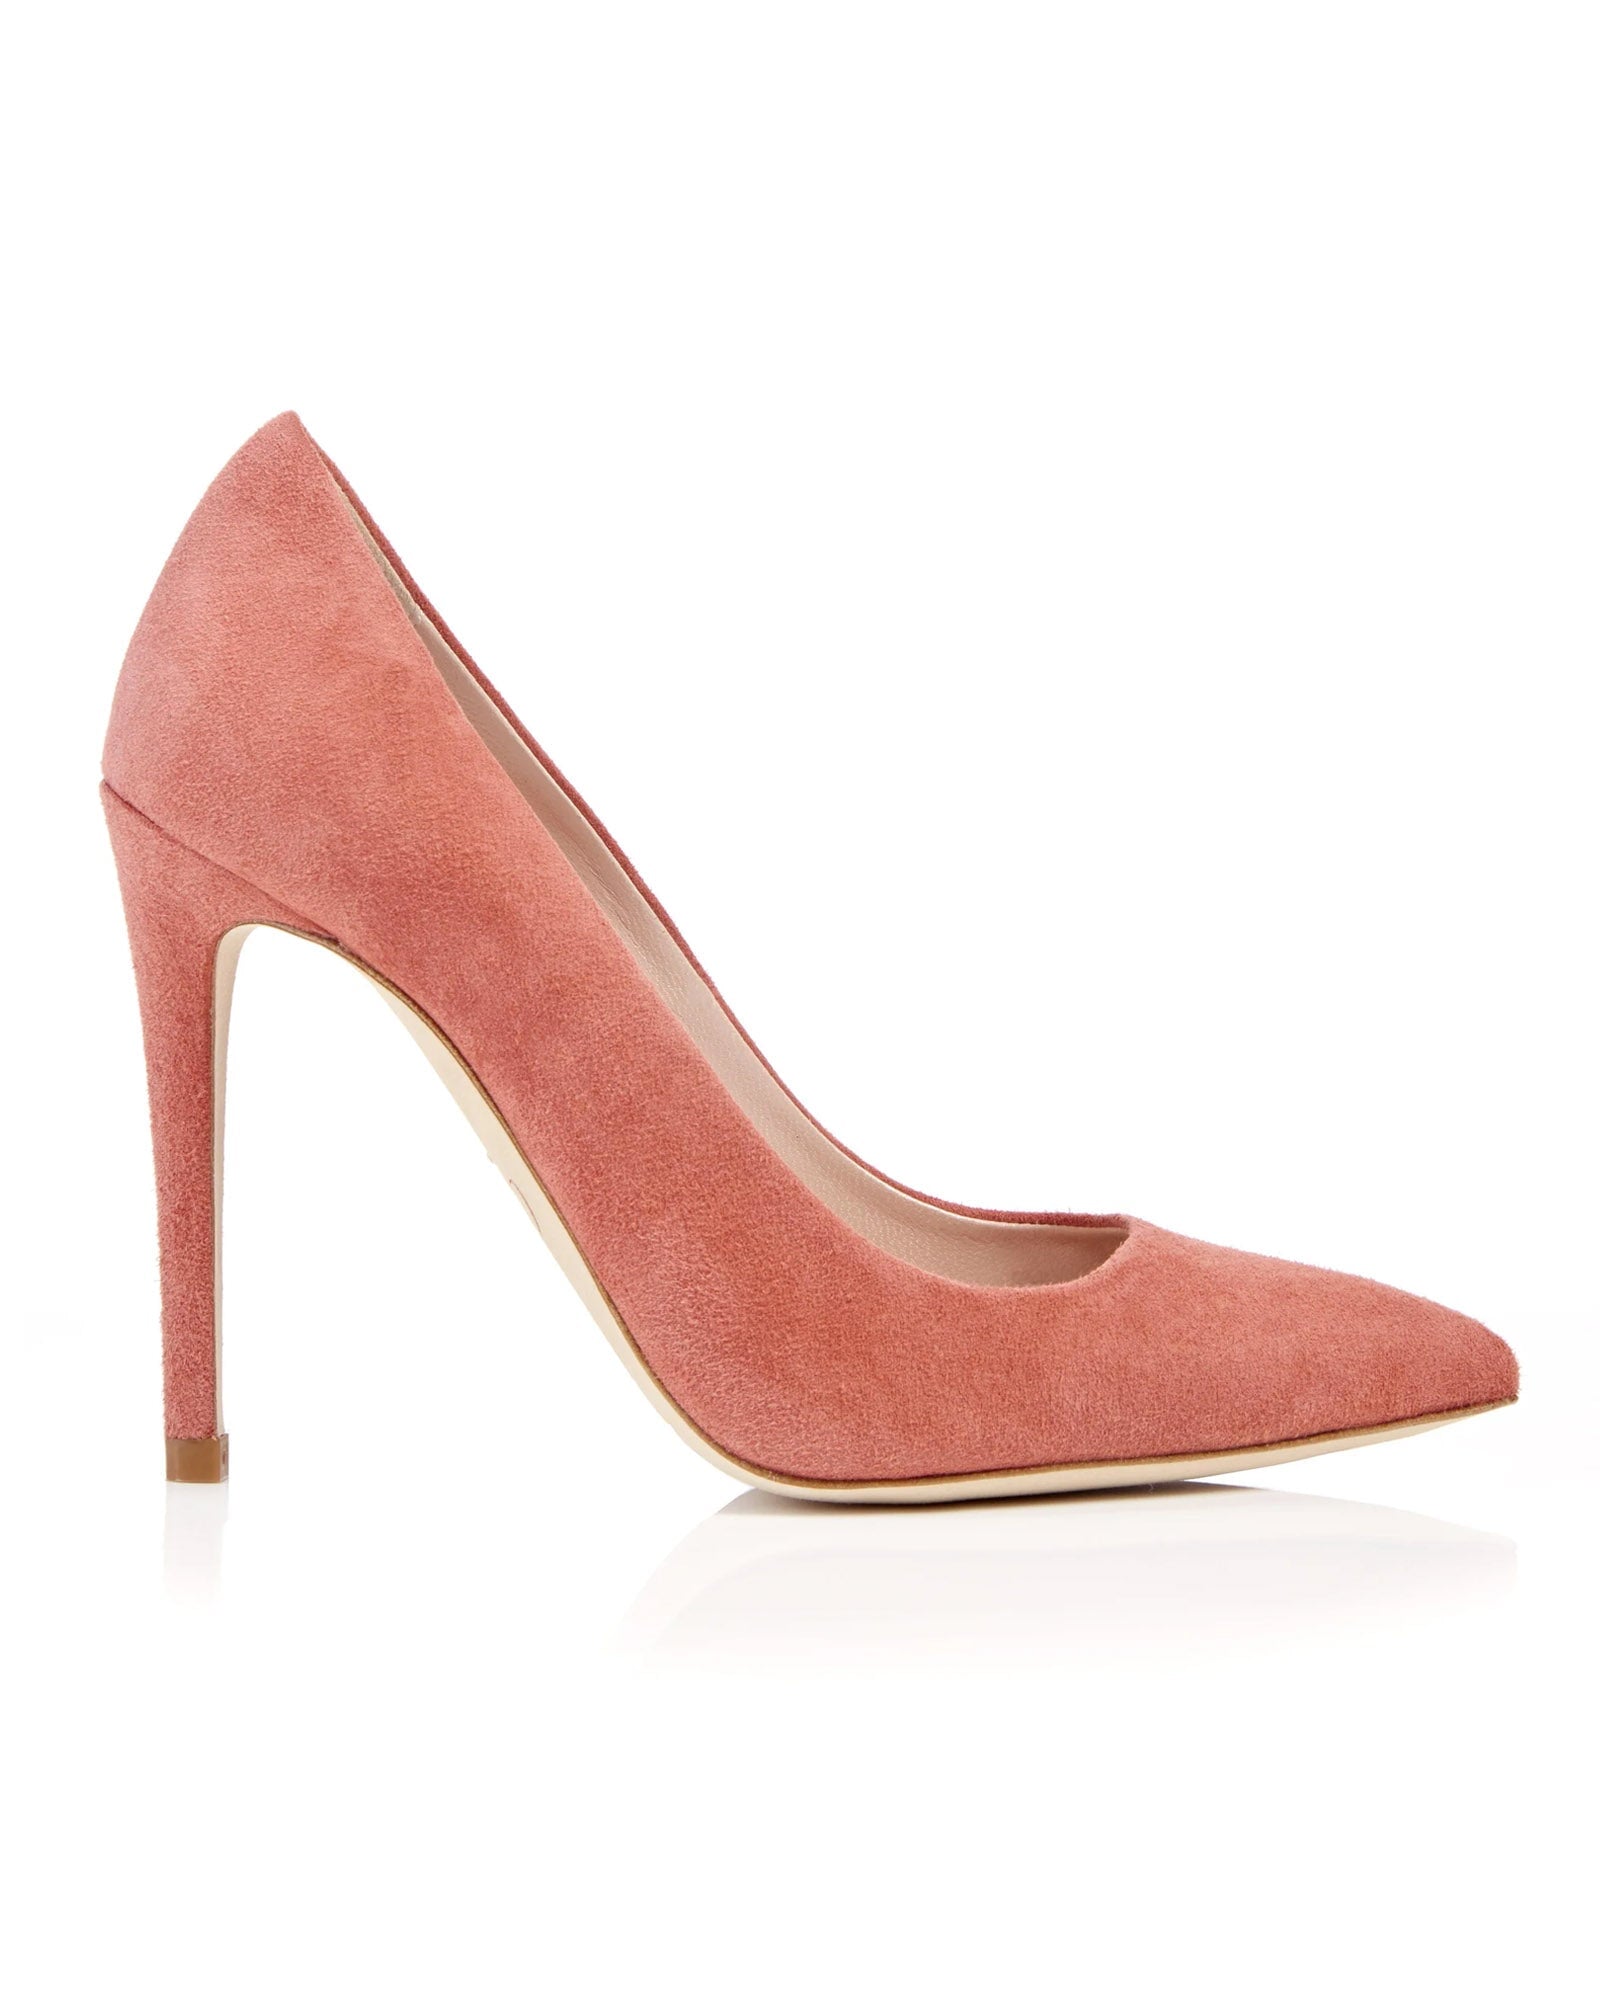 Rebecca Makeup Fashion Shoe Pink Pointed High Heel Court  image